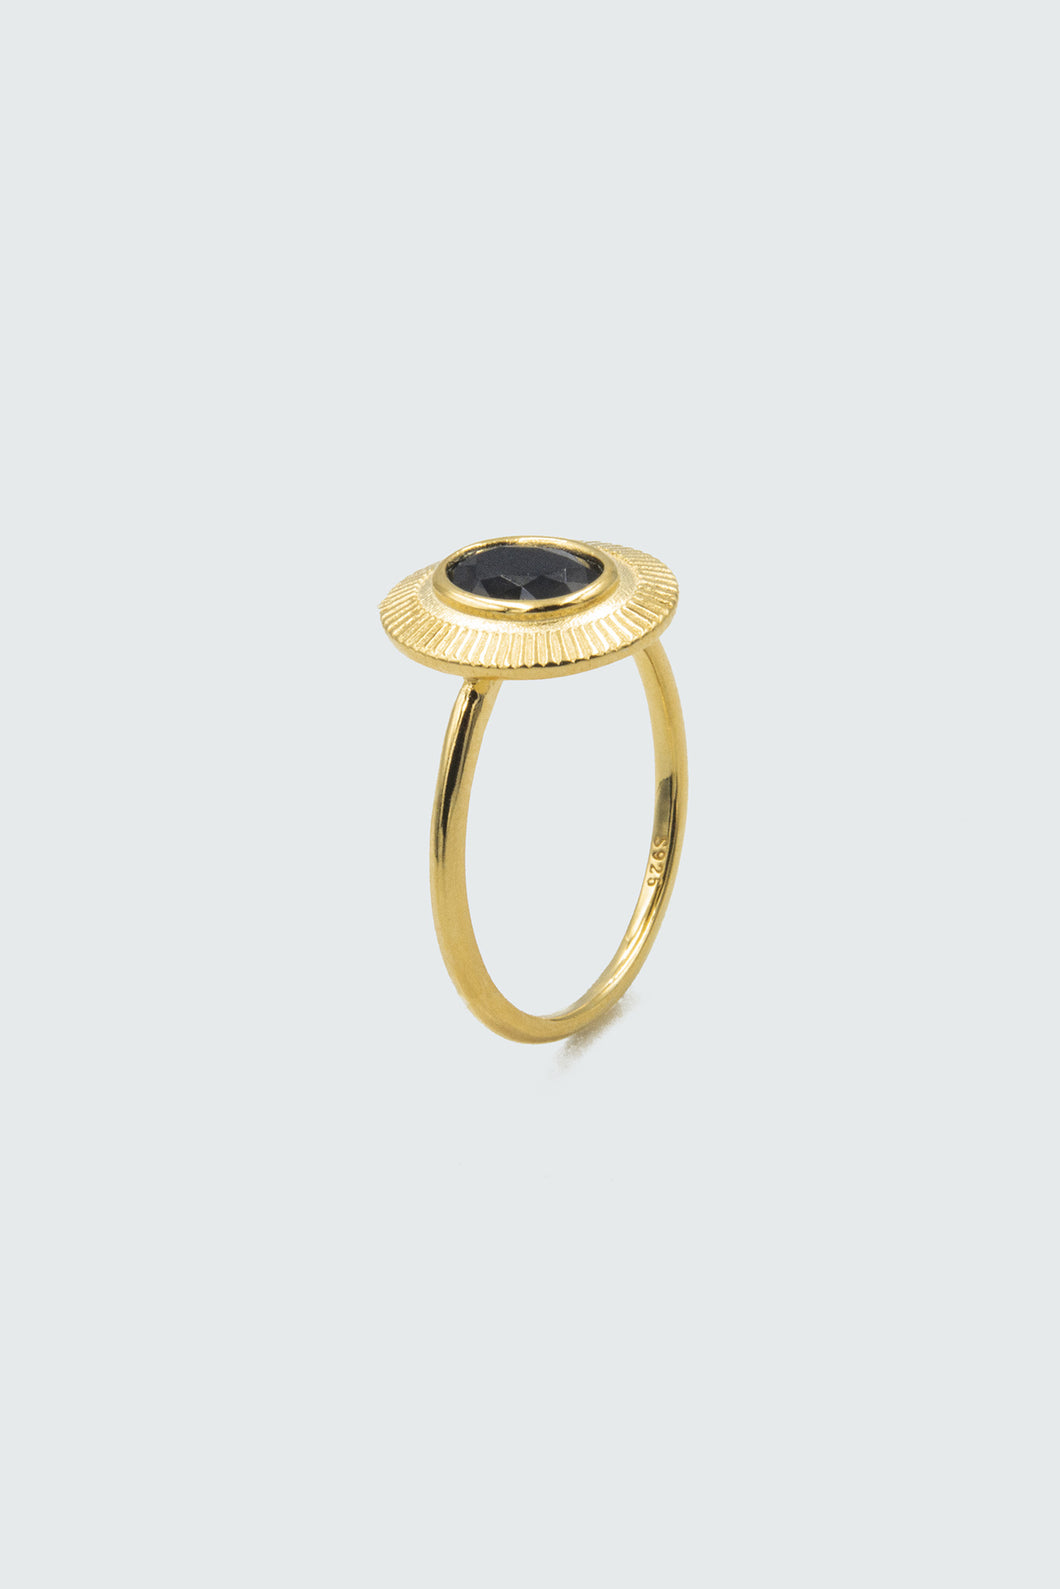 Bohemian Oval Black Stone Gold Ring